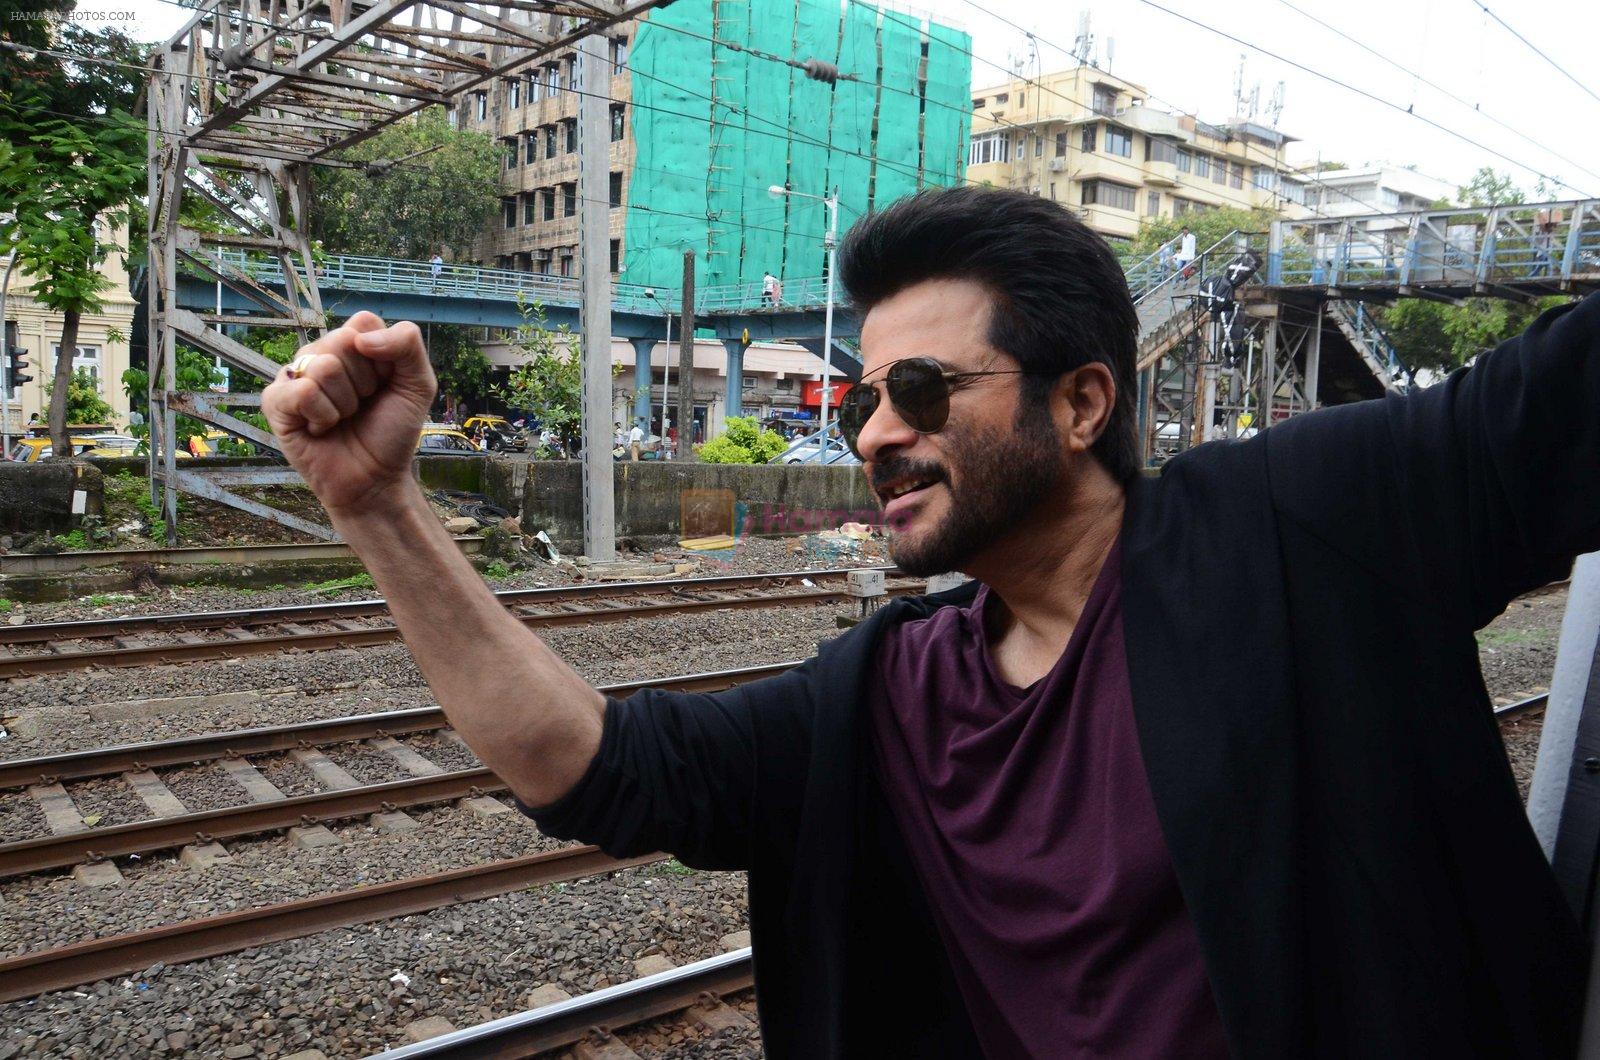 Anil Kapoor promotes 24 Season 2 in Mumbai Train on 14th July 2016